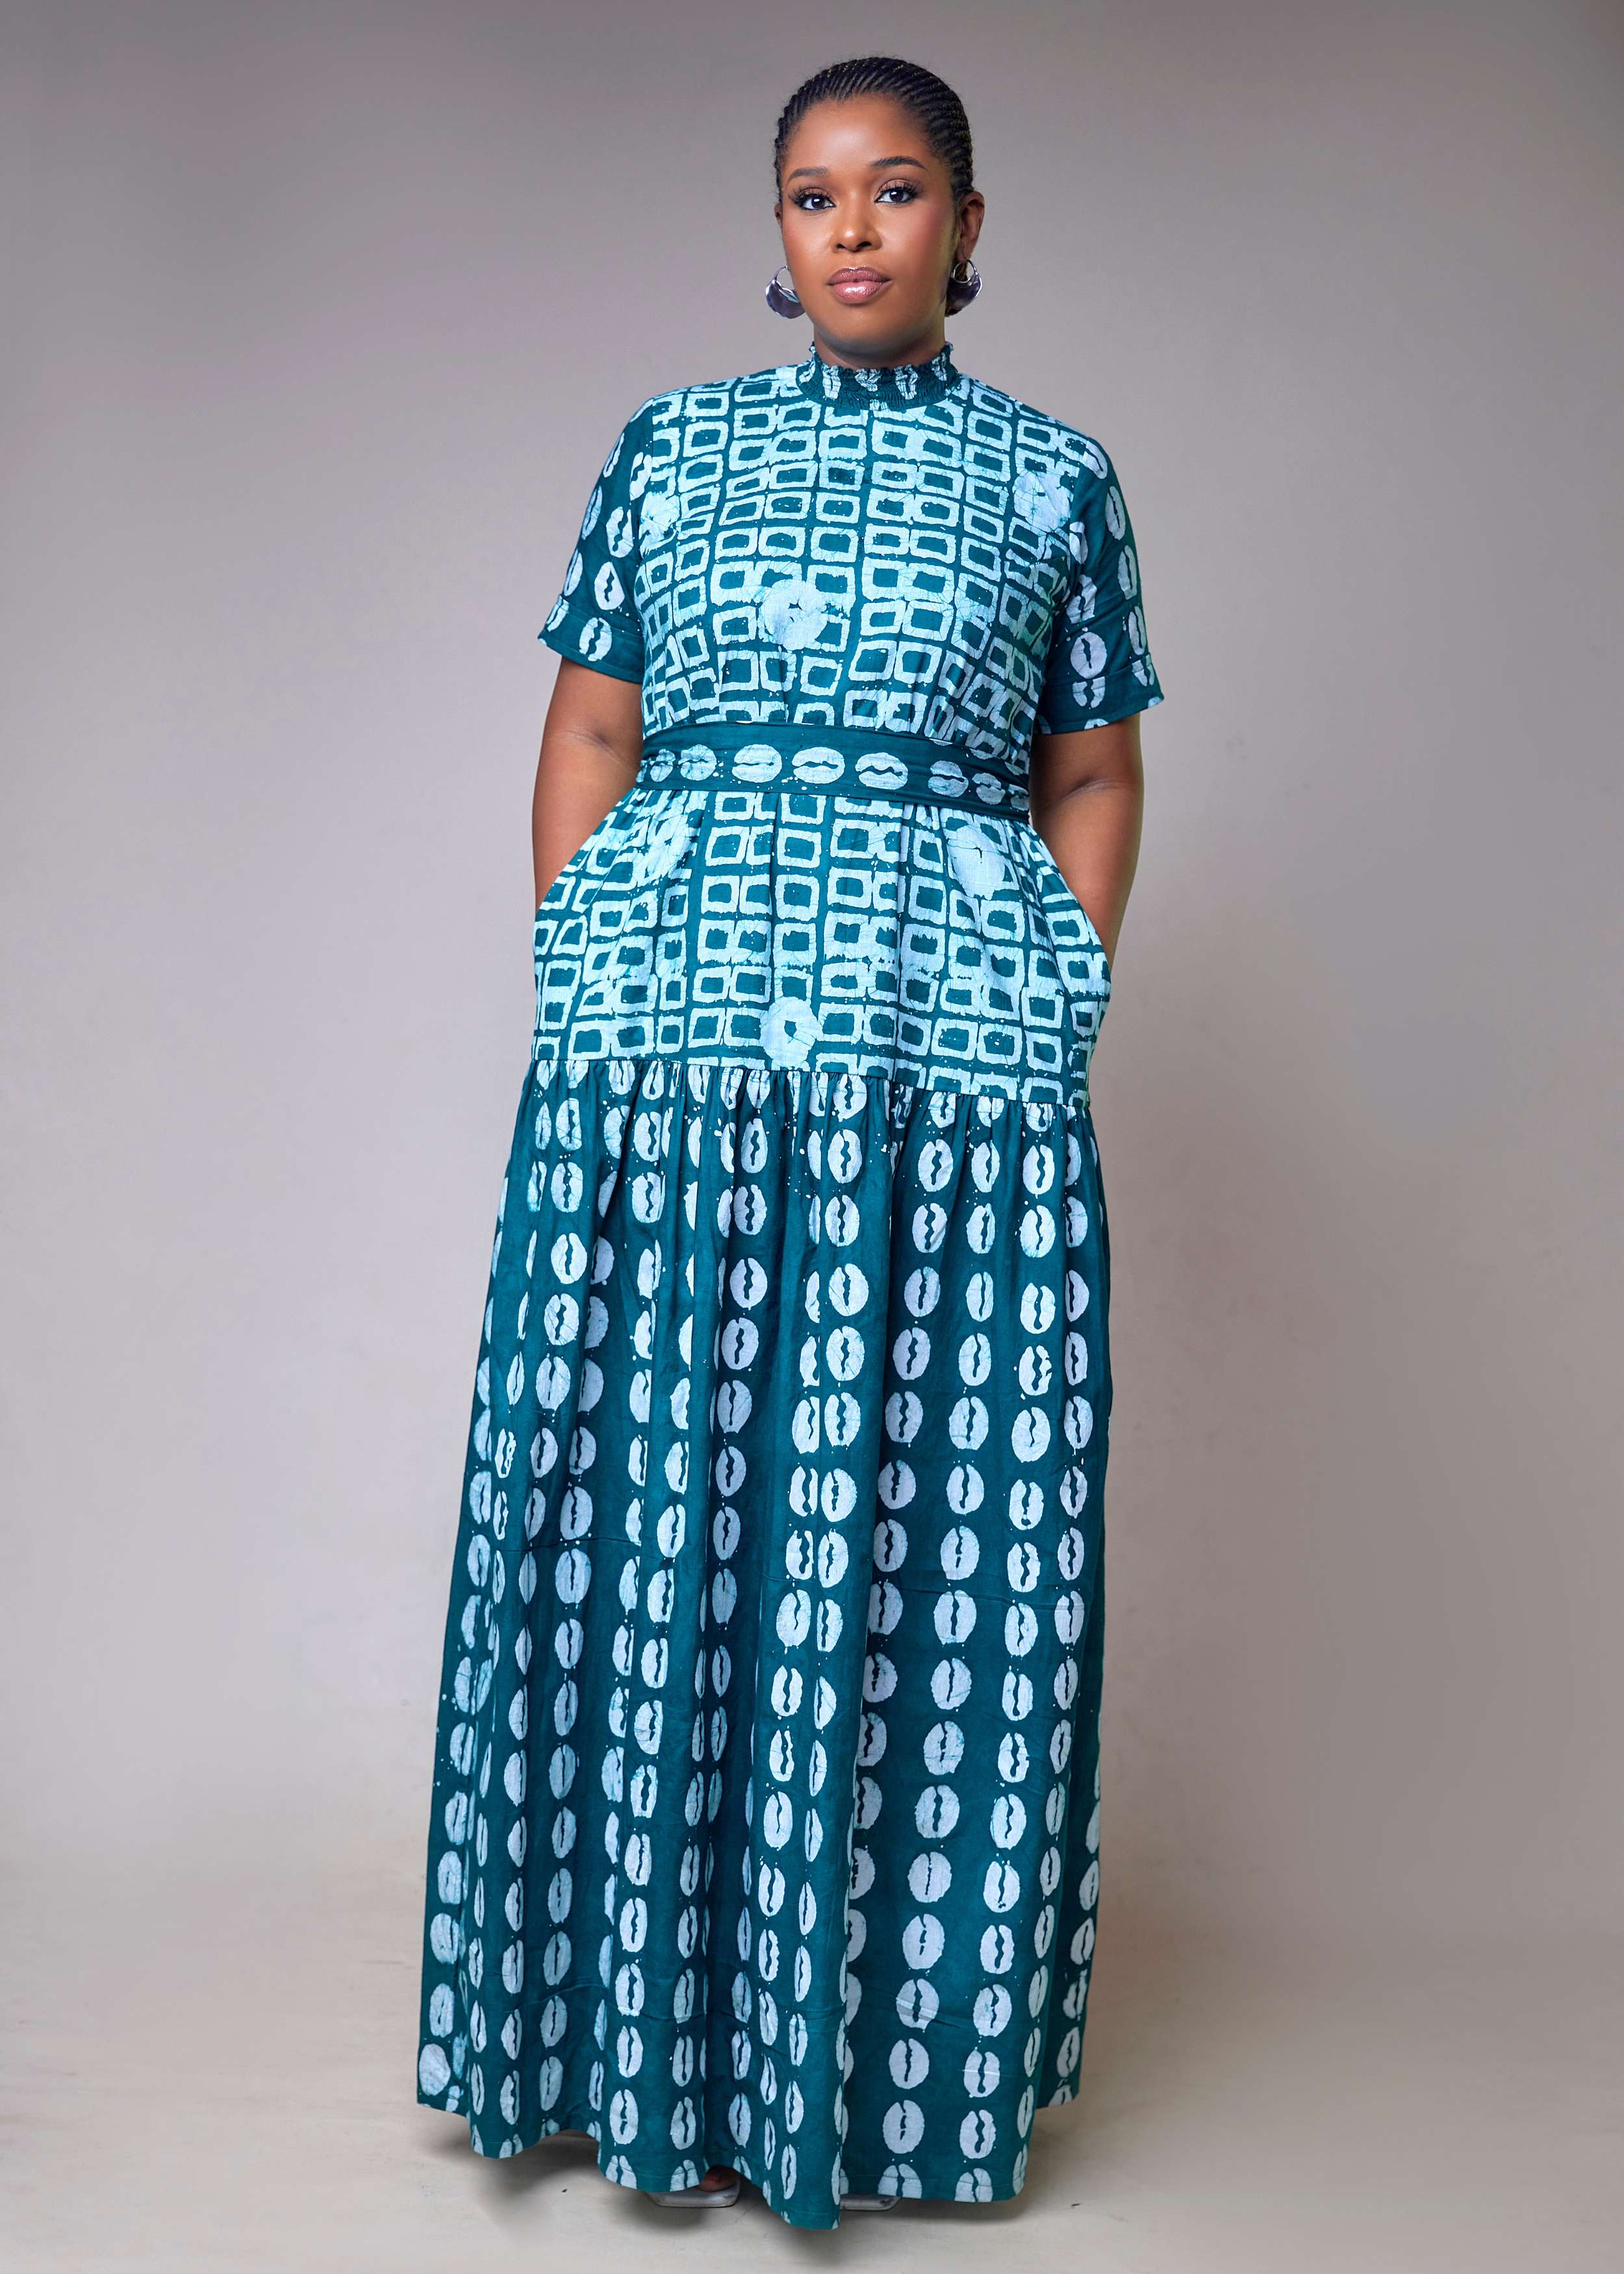 Toyin Maxi Dress (Hand-dyed)